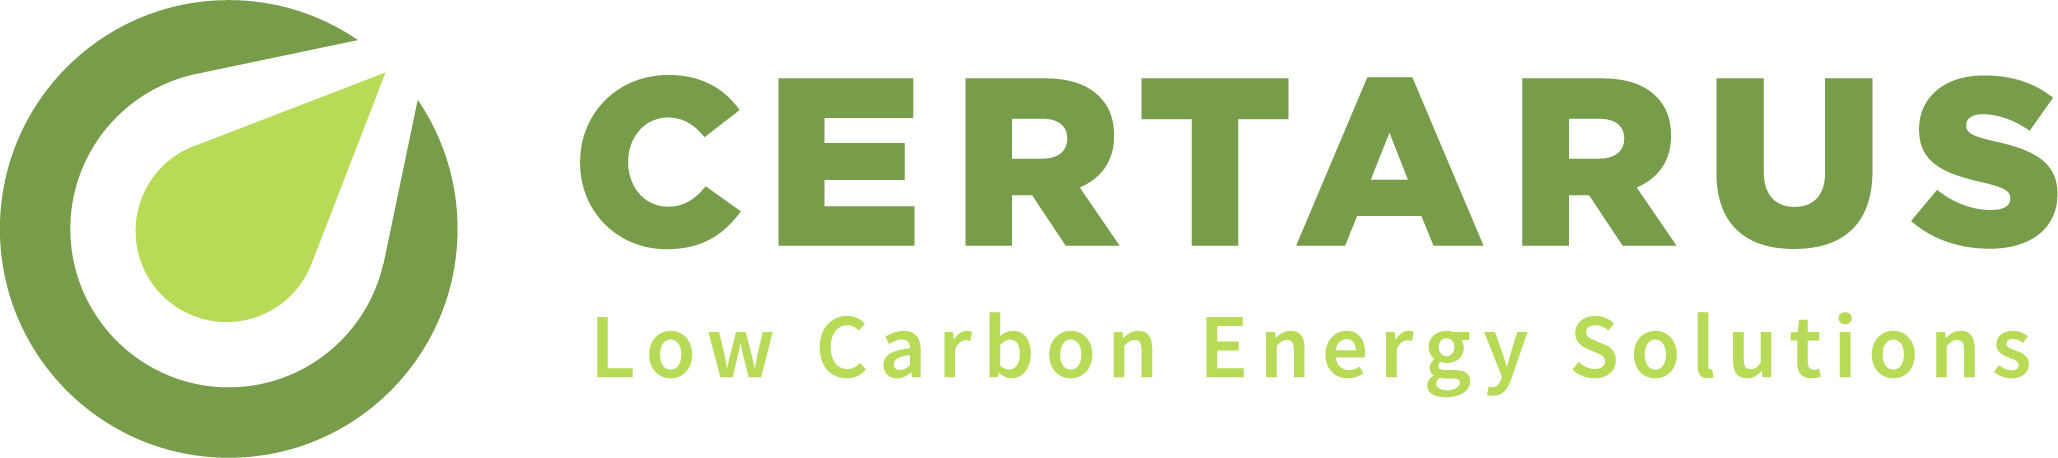 Certarus Low Carbon Energy Solutions